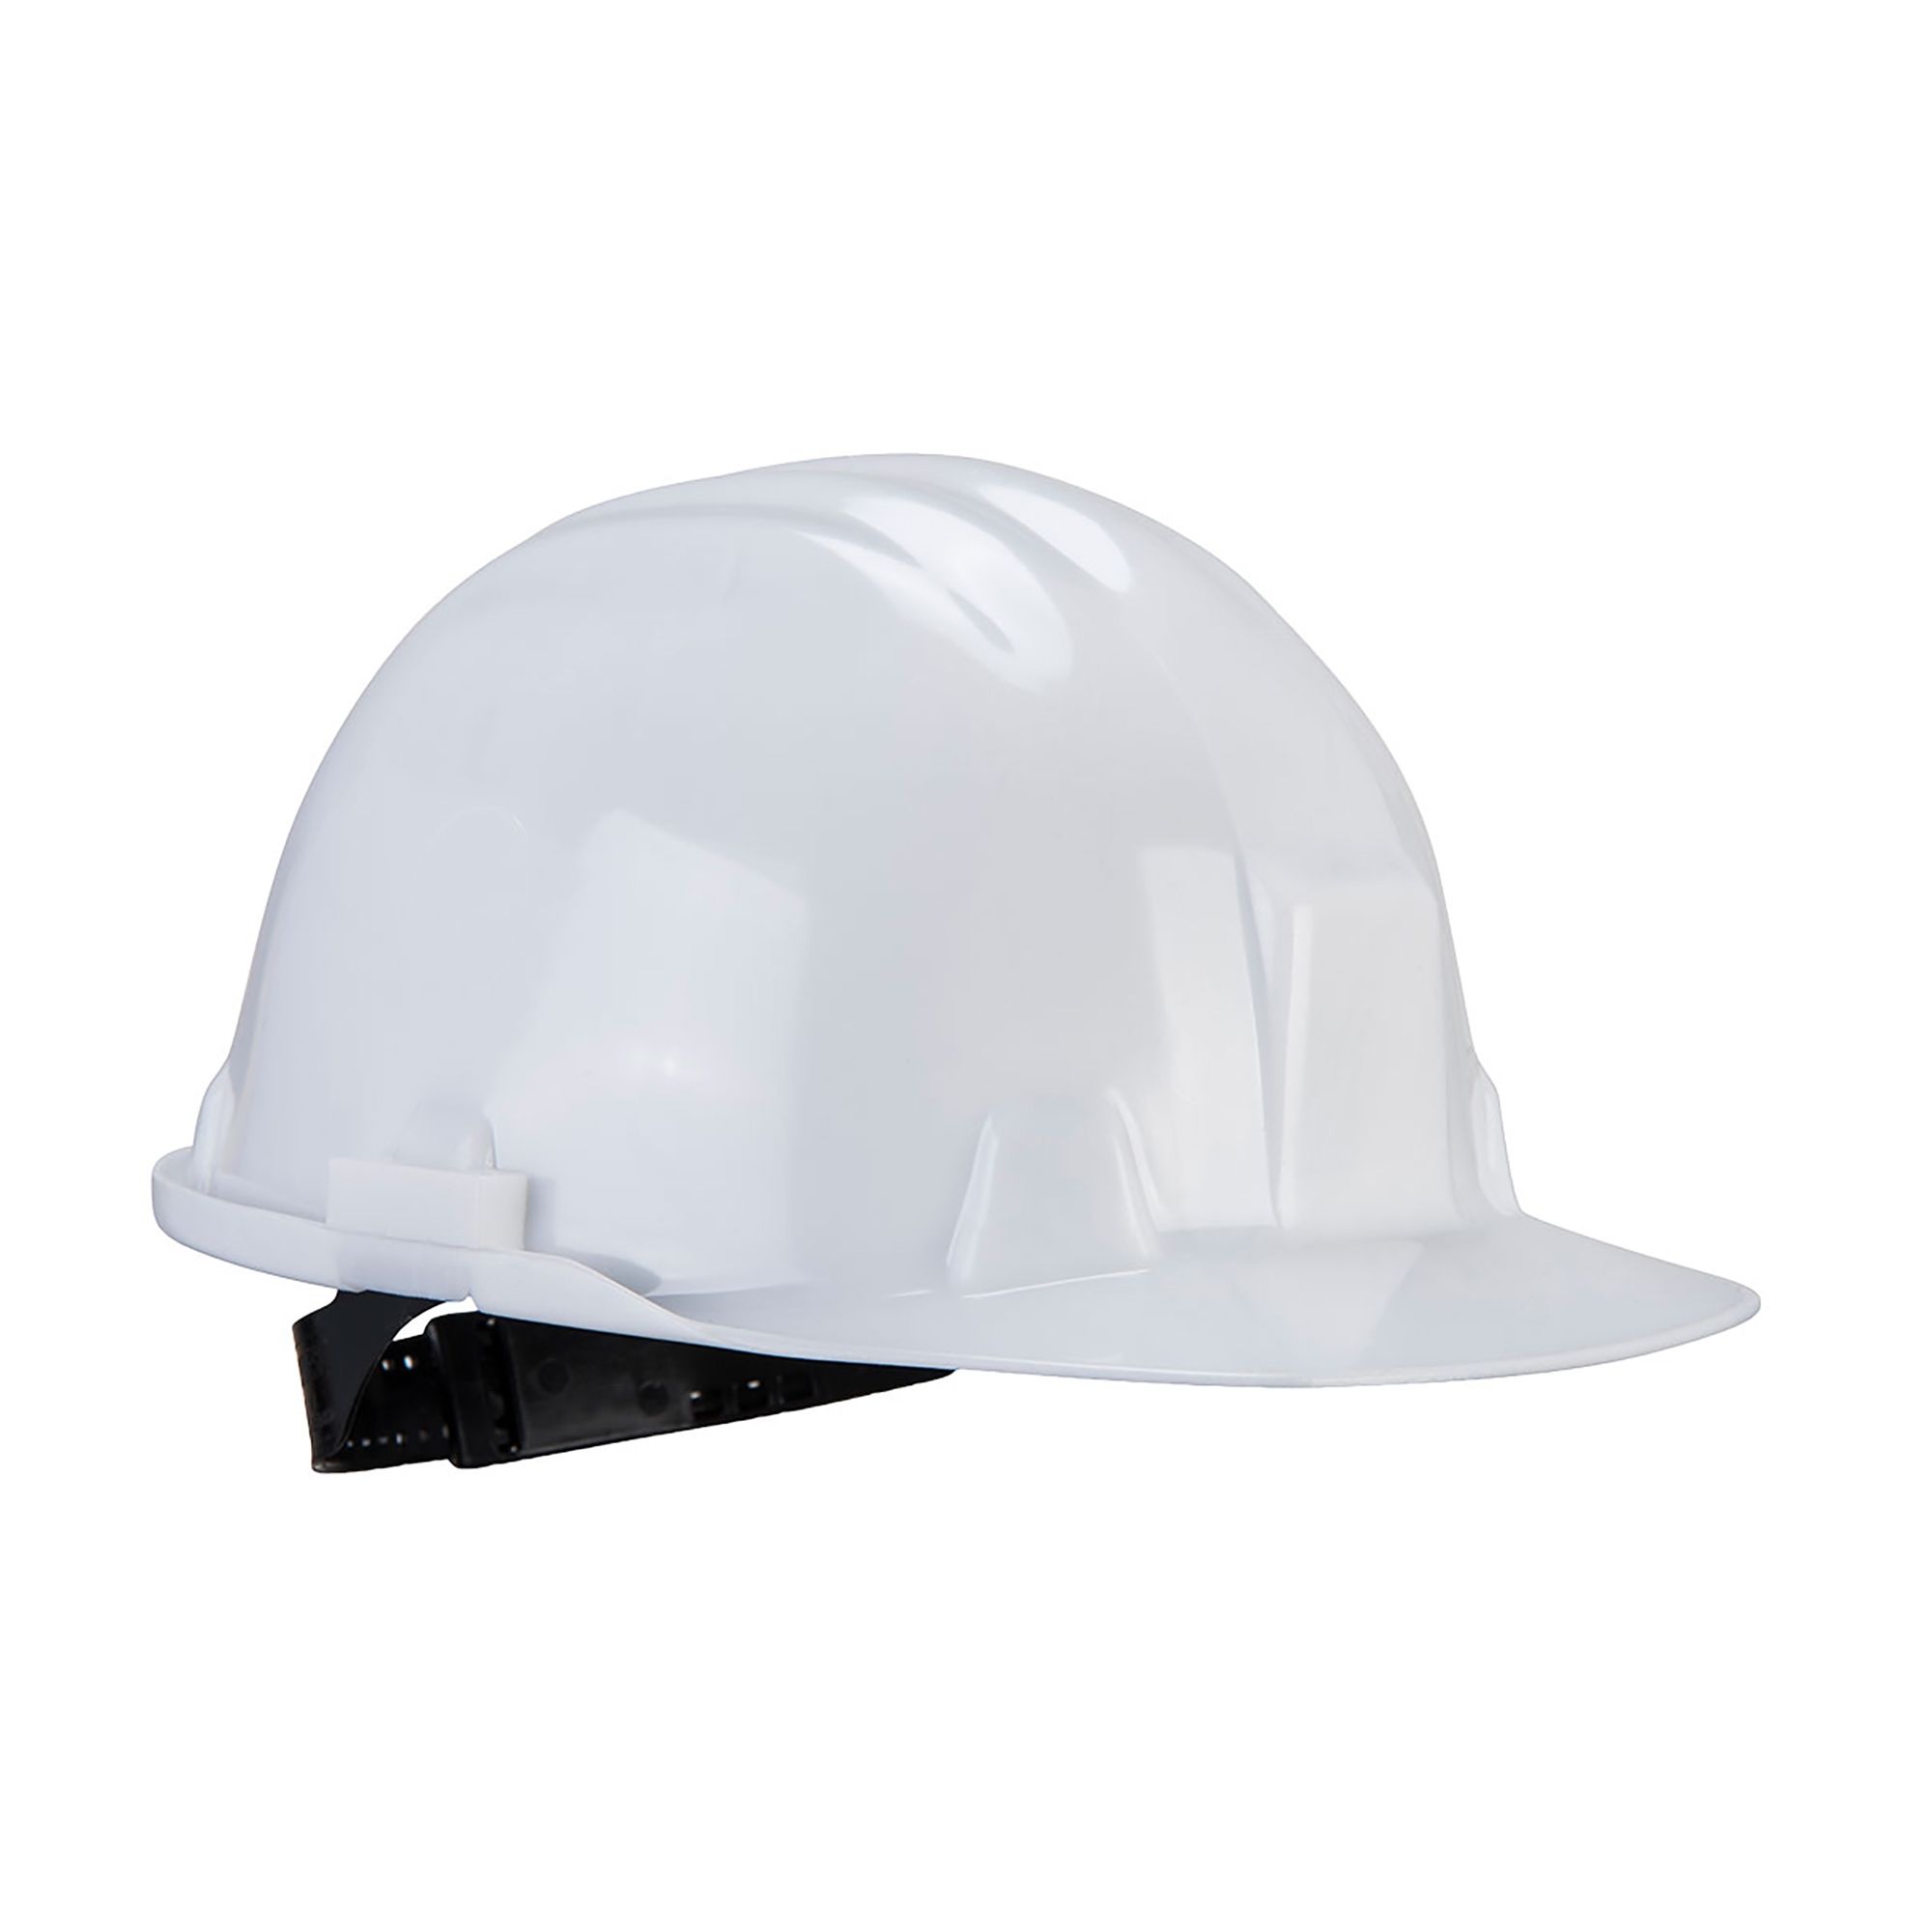 Details about   Portwest workwear PS50 Arrow Safety Helmet 